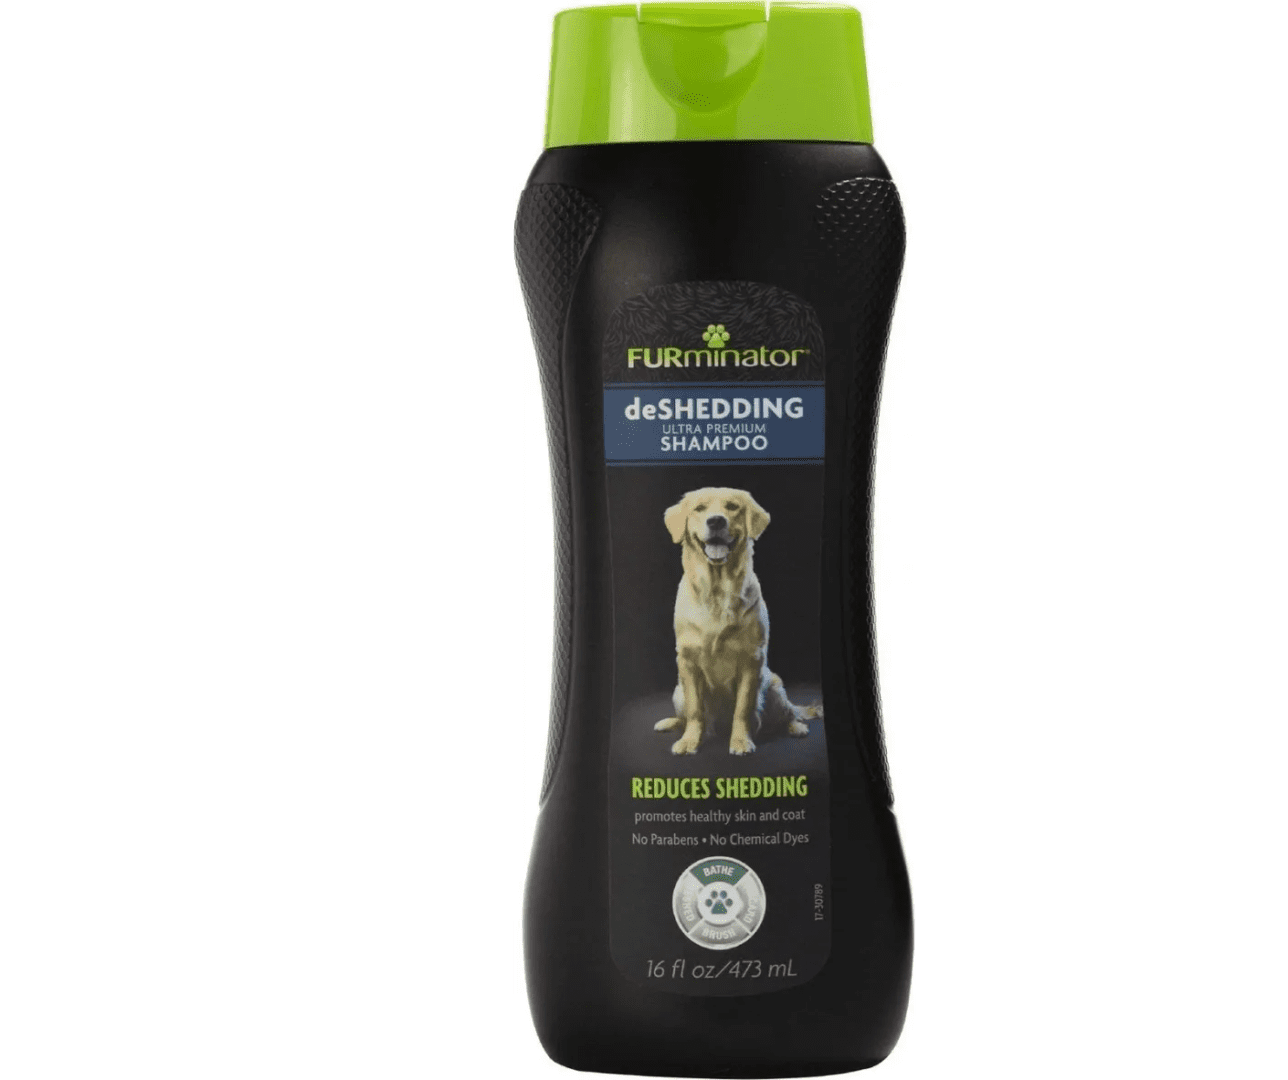 A bottle of furminator dog shampoo.